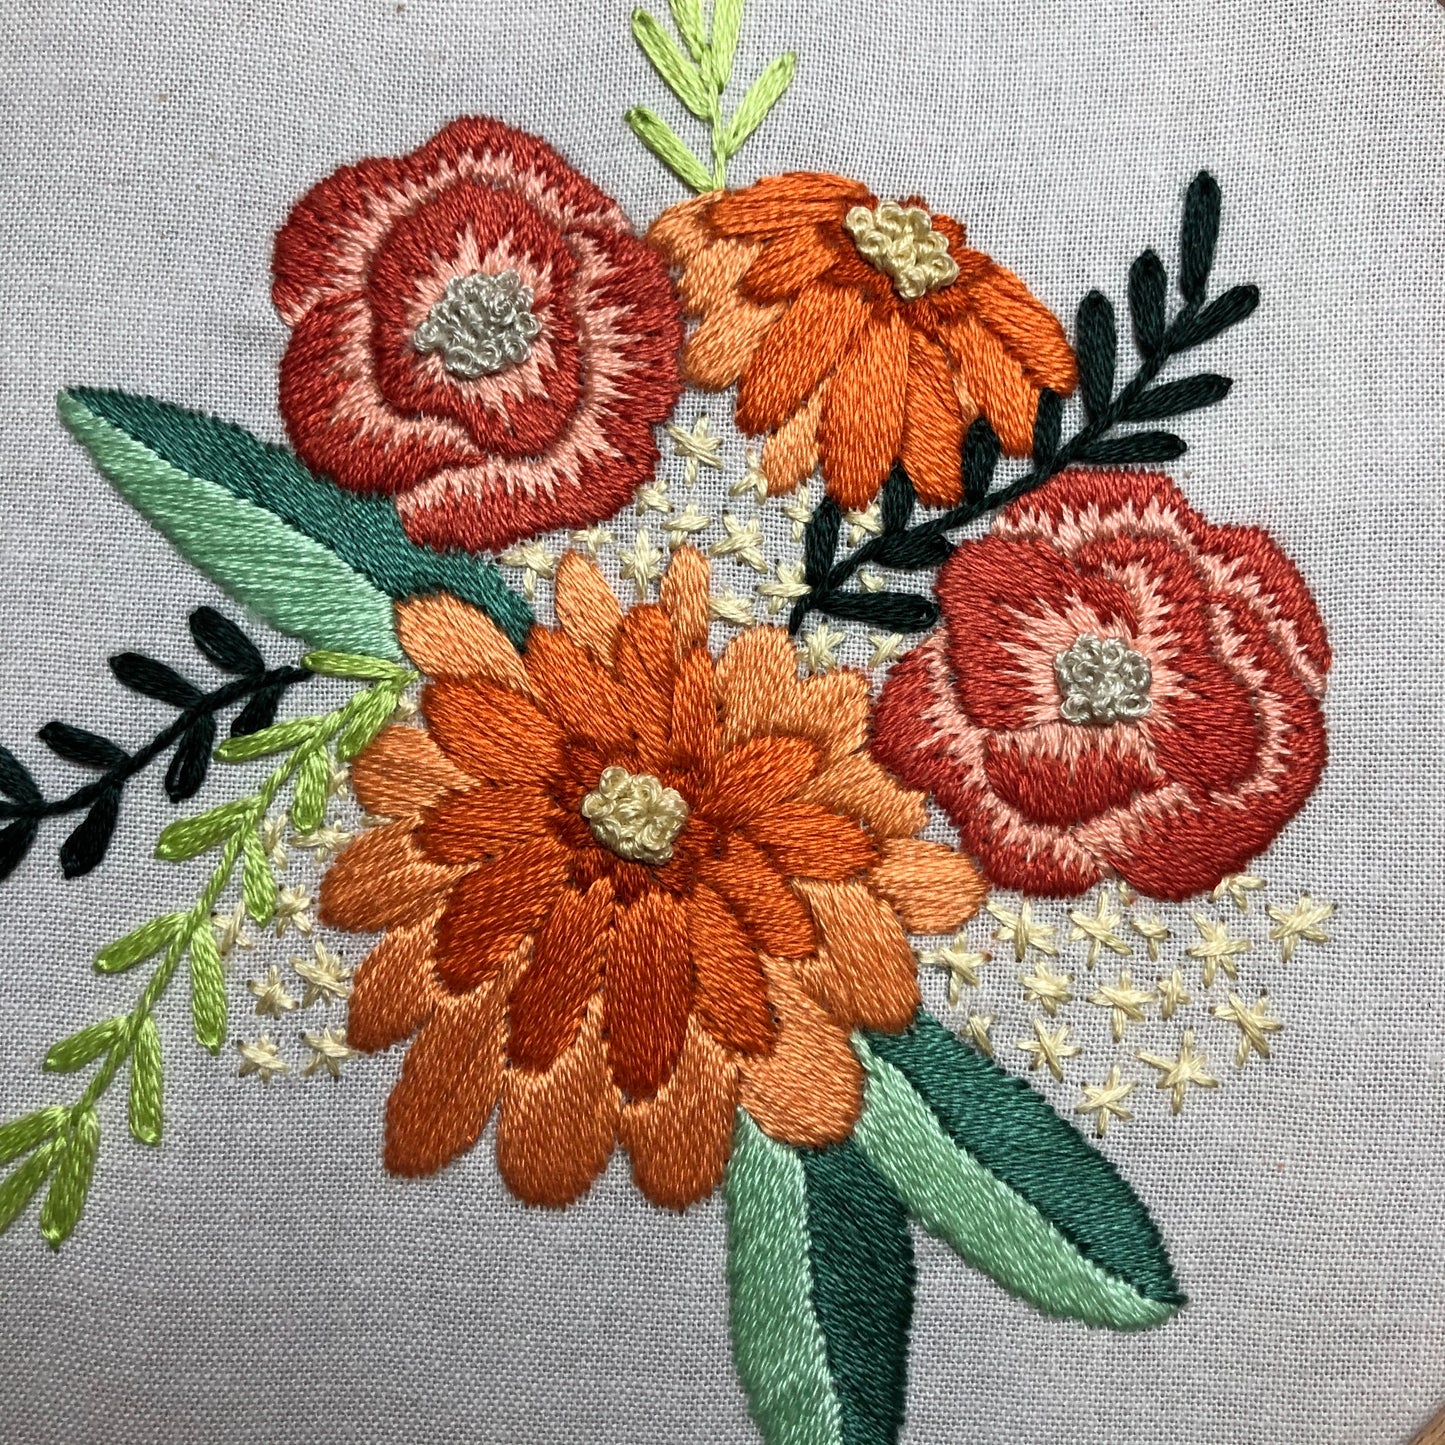 Spring Flowers - Beginner Hand Embroidery Pattern PDF